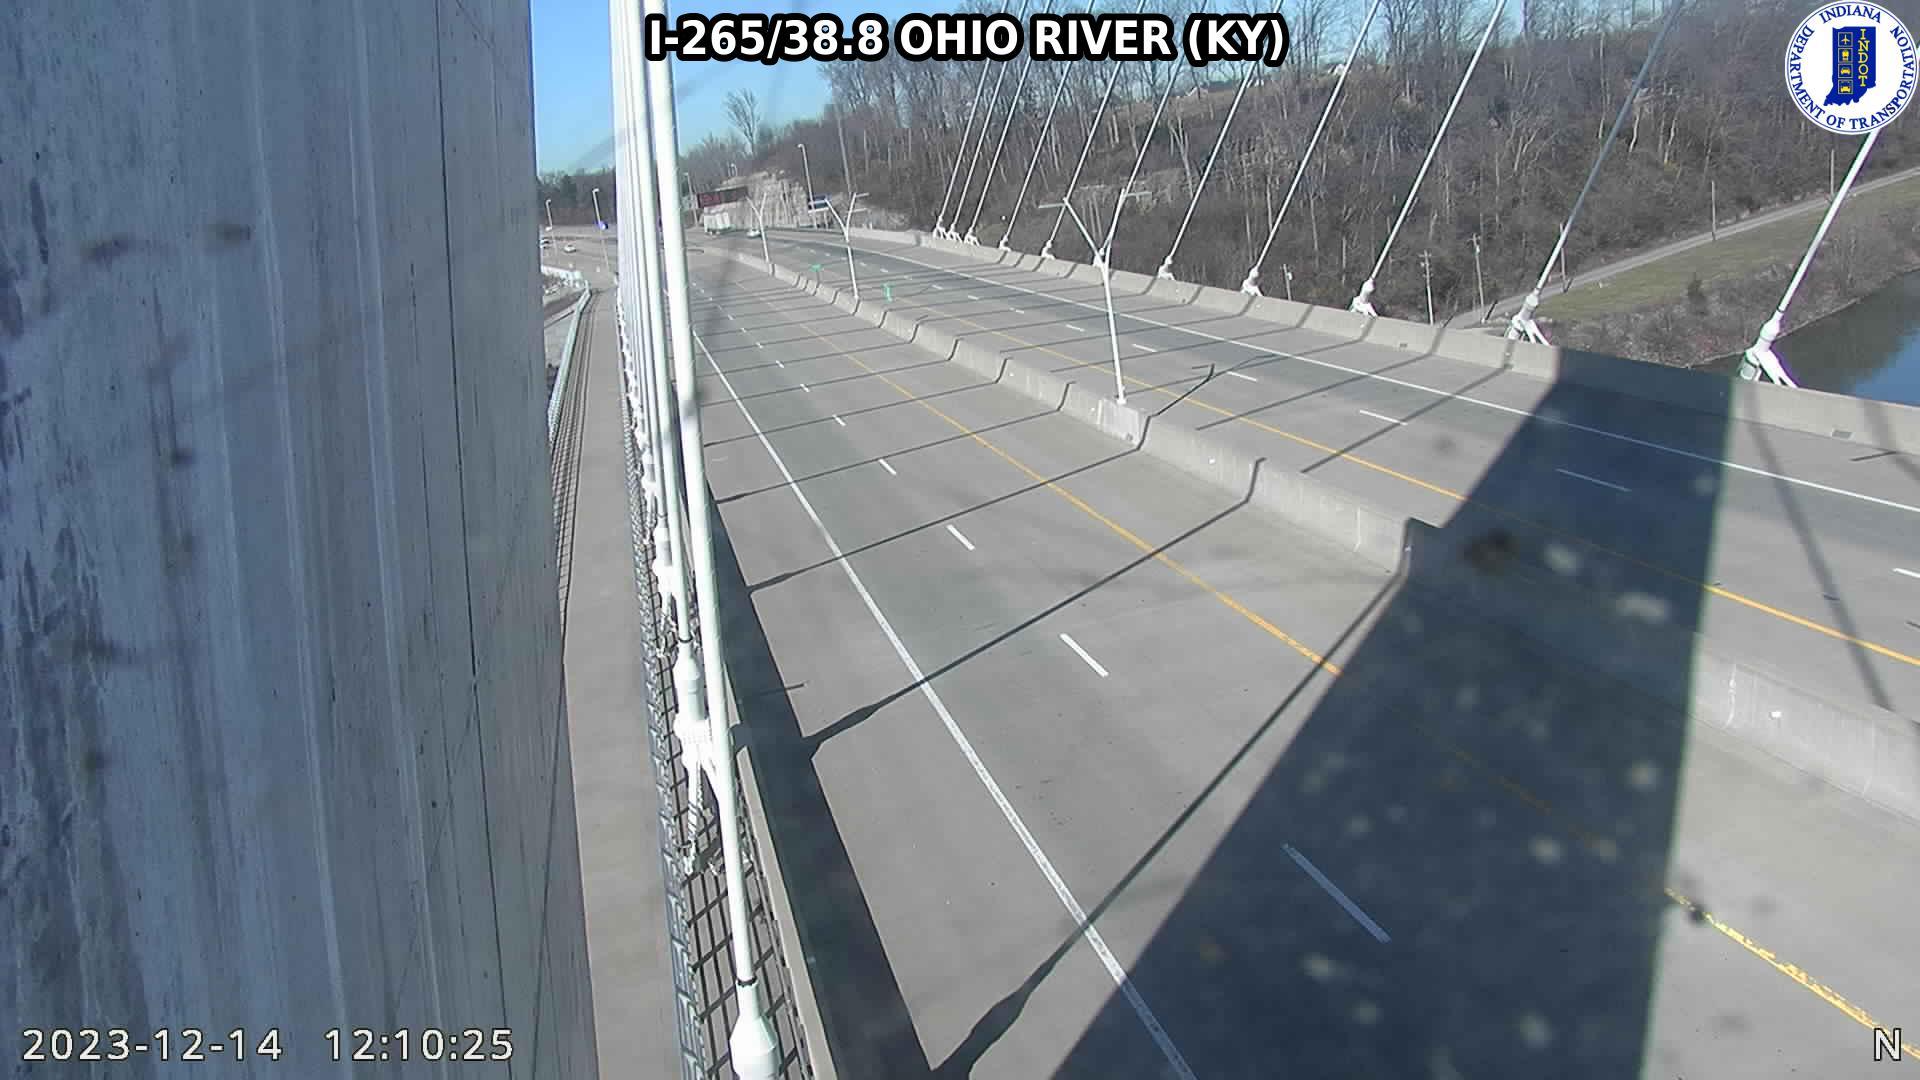 Louisville: KY I-265: I-265/38.8 OHIO RIVER (KY) Traffic Camera